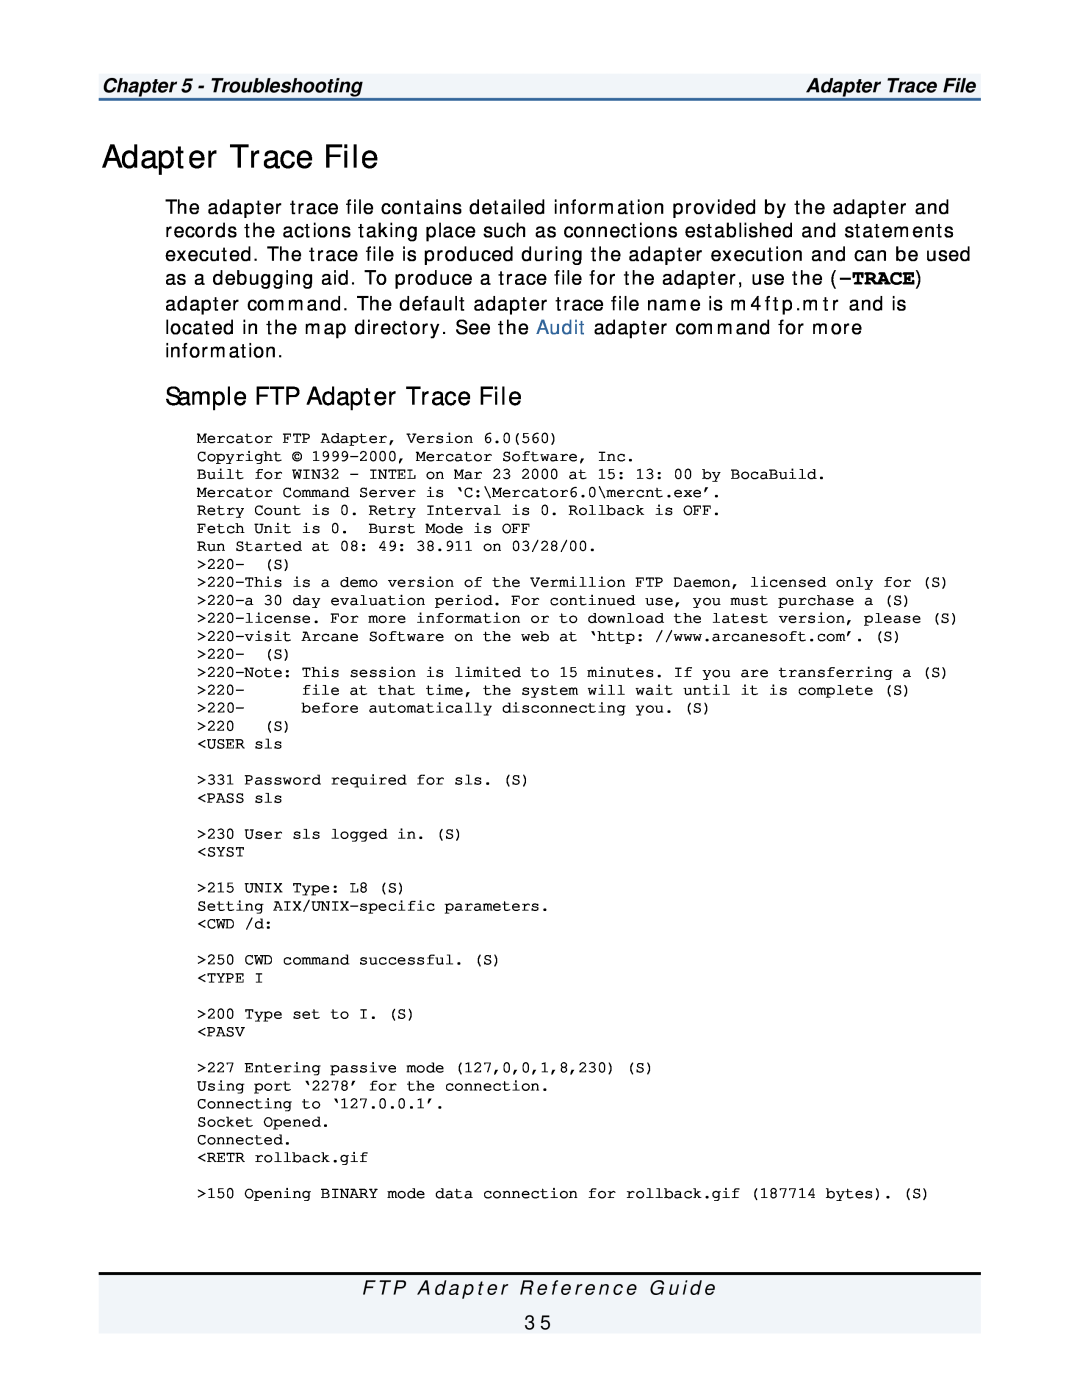 IBM manual Sample FTP Adapter Trace File, Troubleshooting, F T P A d a p t e r R e f e r e n c e G u i d e 